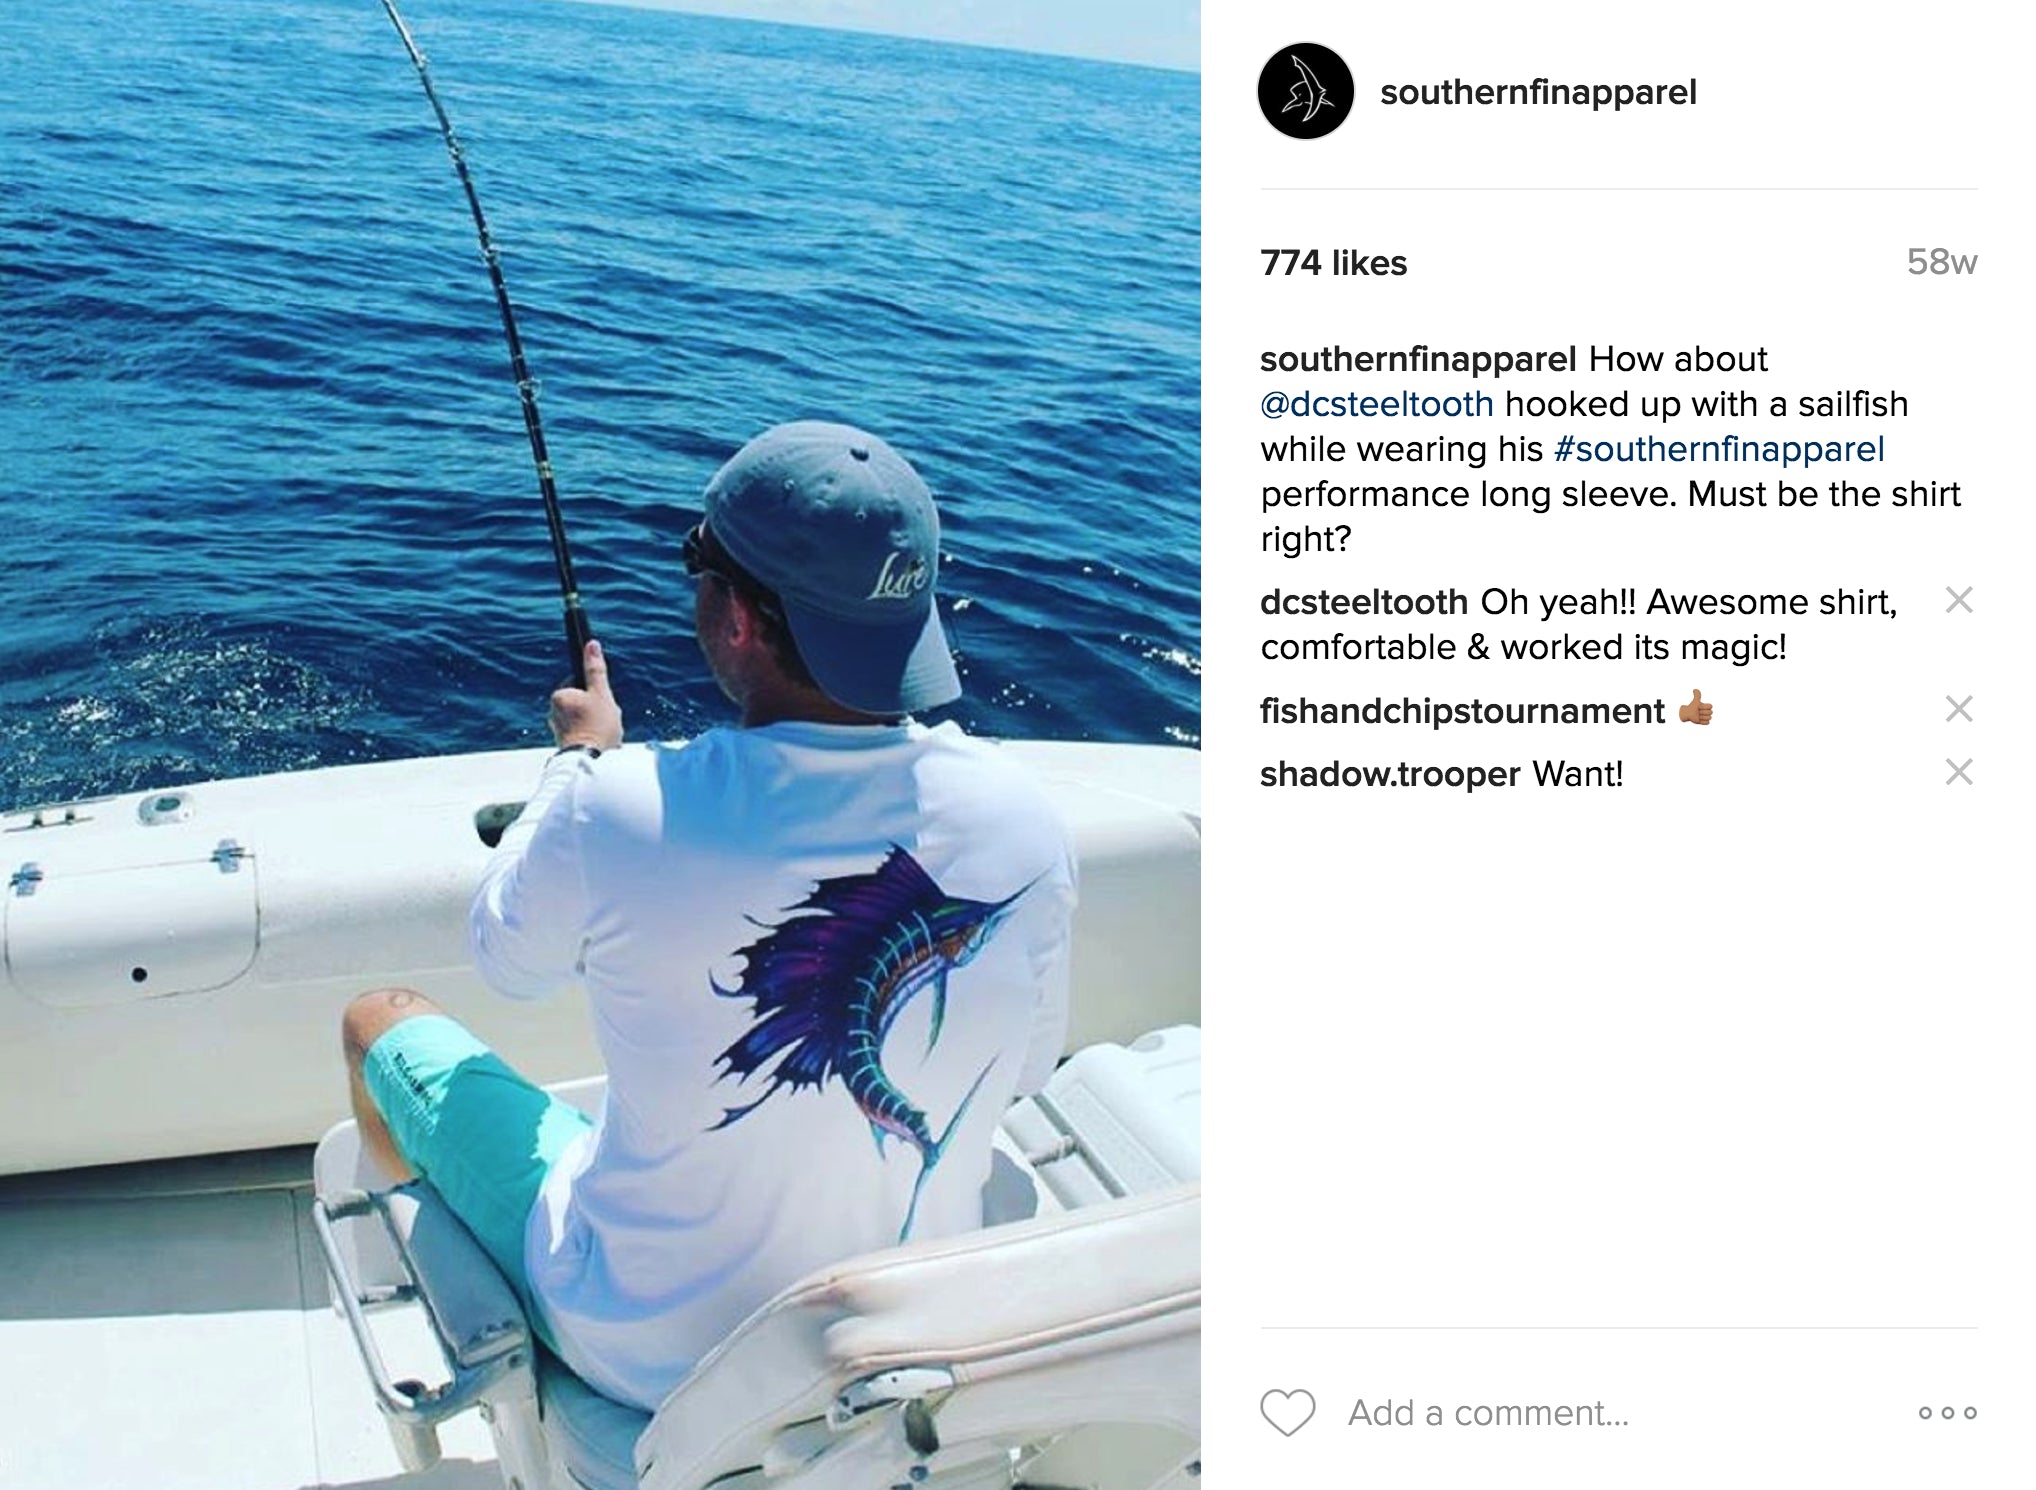 Performance Fishing Shirt Long Sleeve UPF 50+ (Sailfish), L